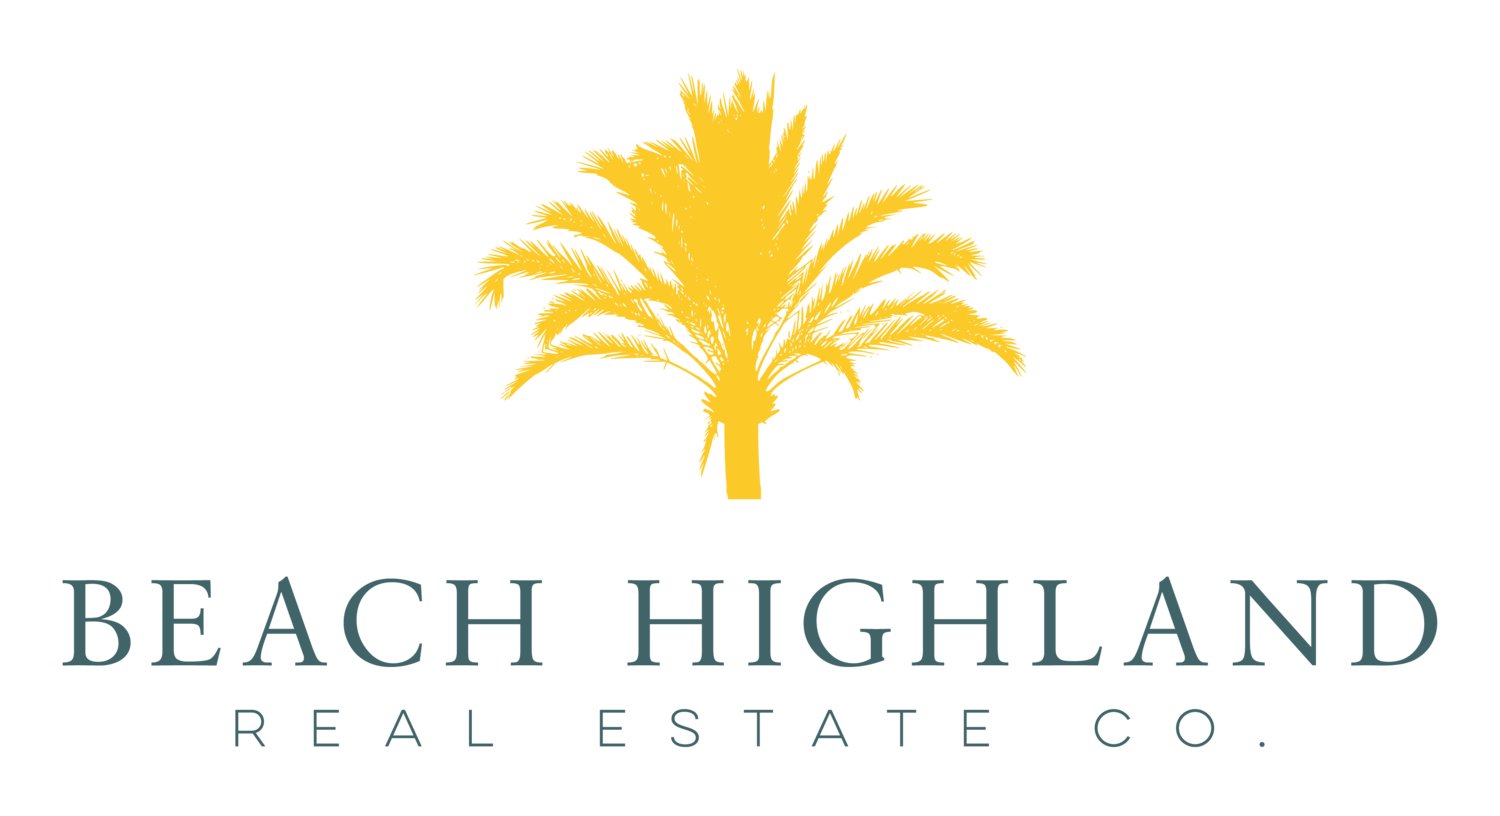 Beach Highland Real Estate Co.